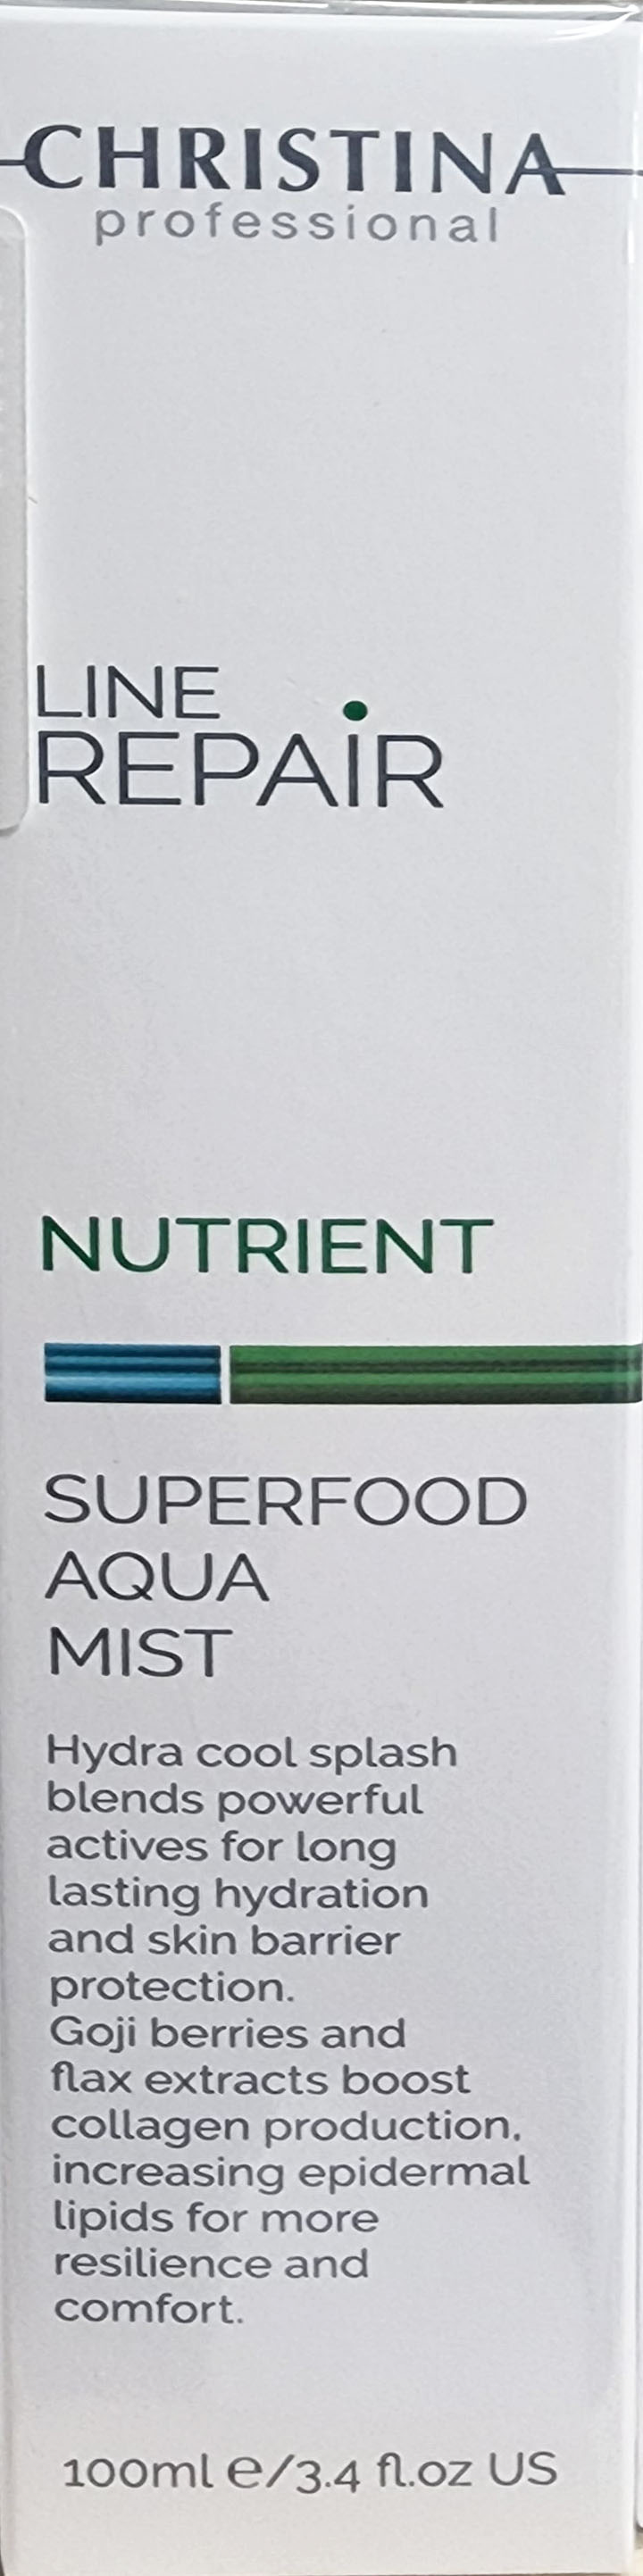 Christina Line Repair - Nutrient - Superfood Aqua Mist 100ml